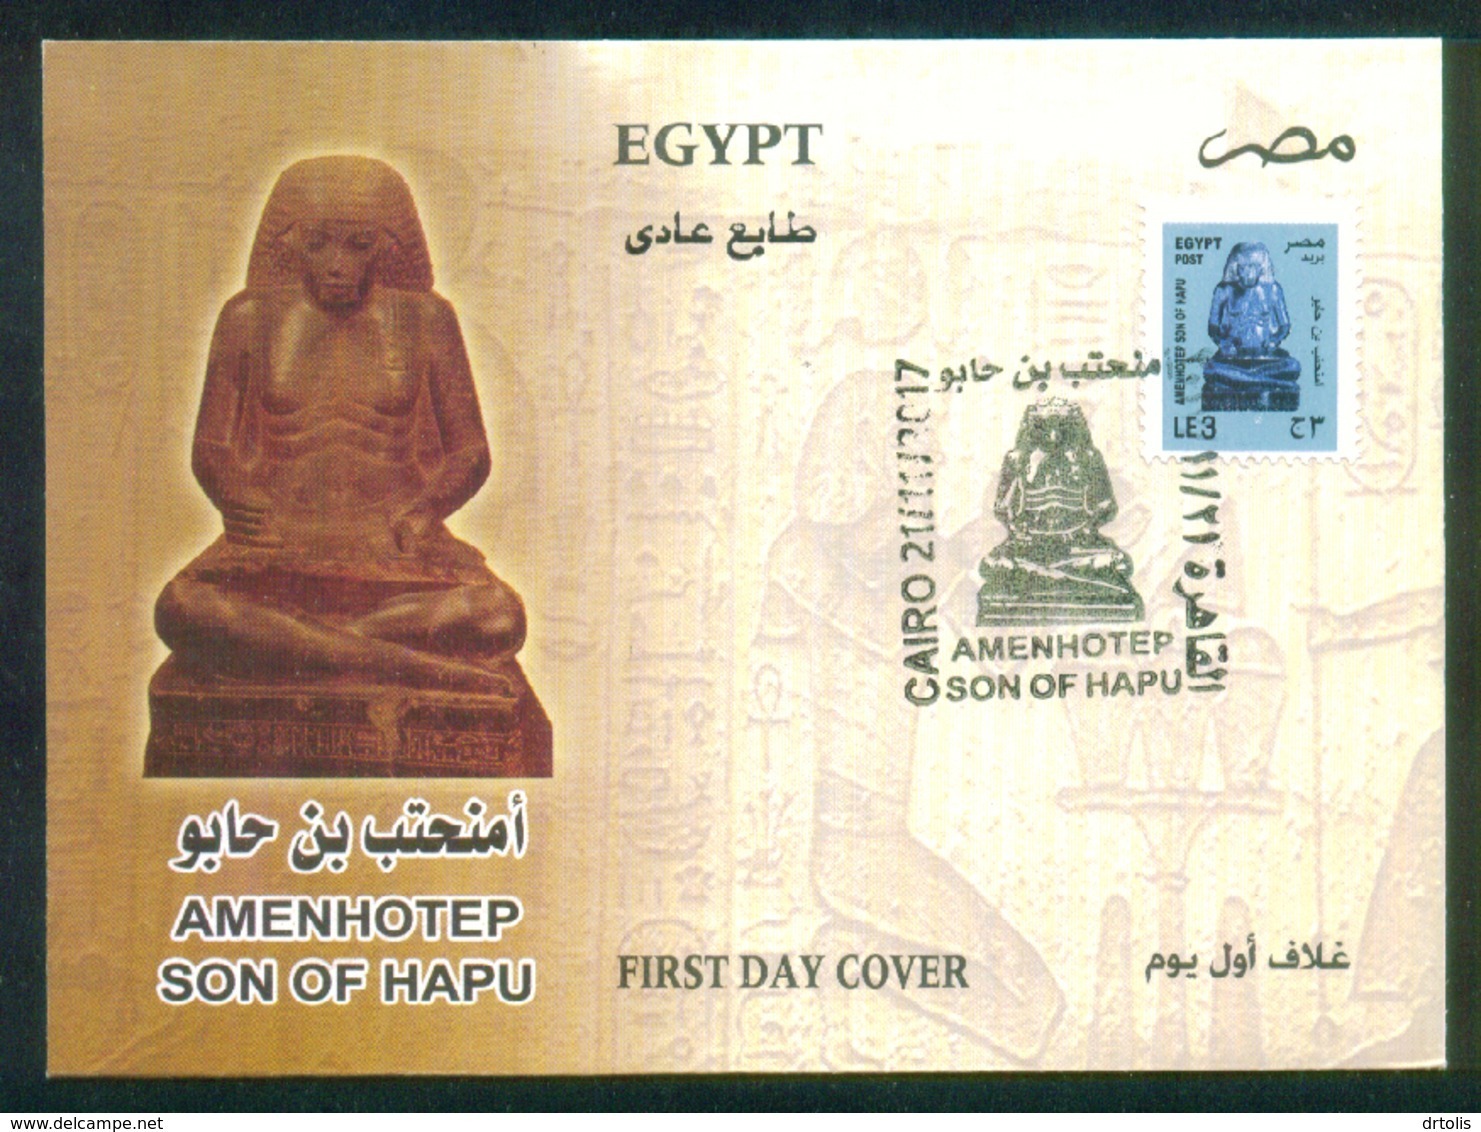 EGYPT / 2017 / AMENHOTEP ; SON OF HAPU /  EGYPTOLOGY / ARCHEOLOGY / FDC - Storia Postale